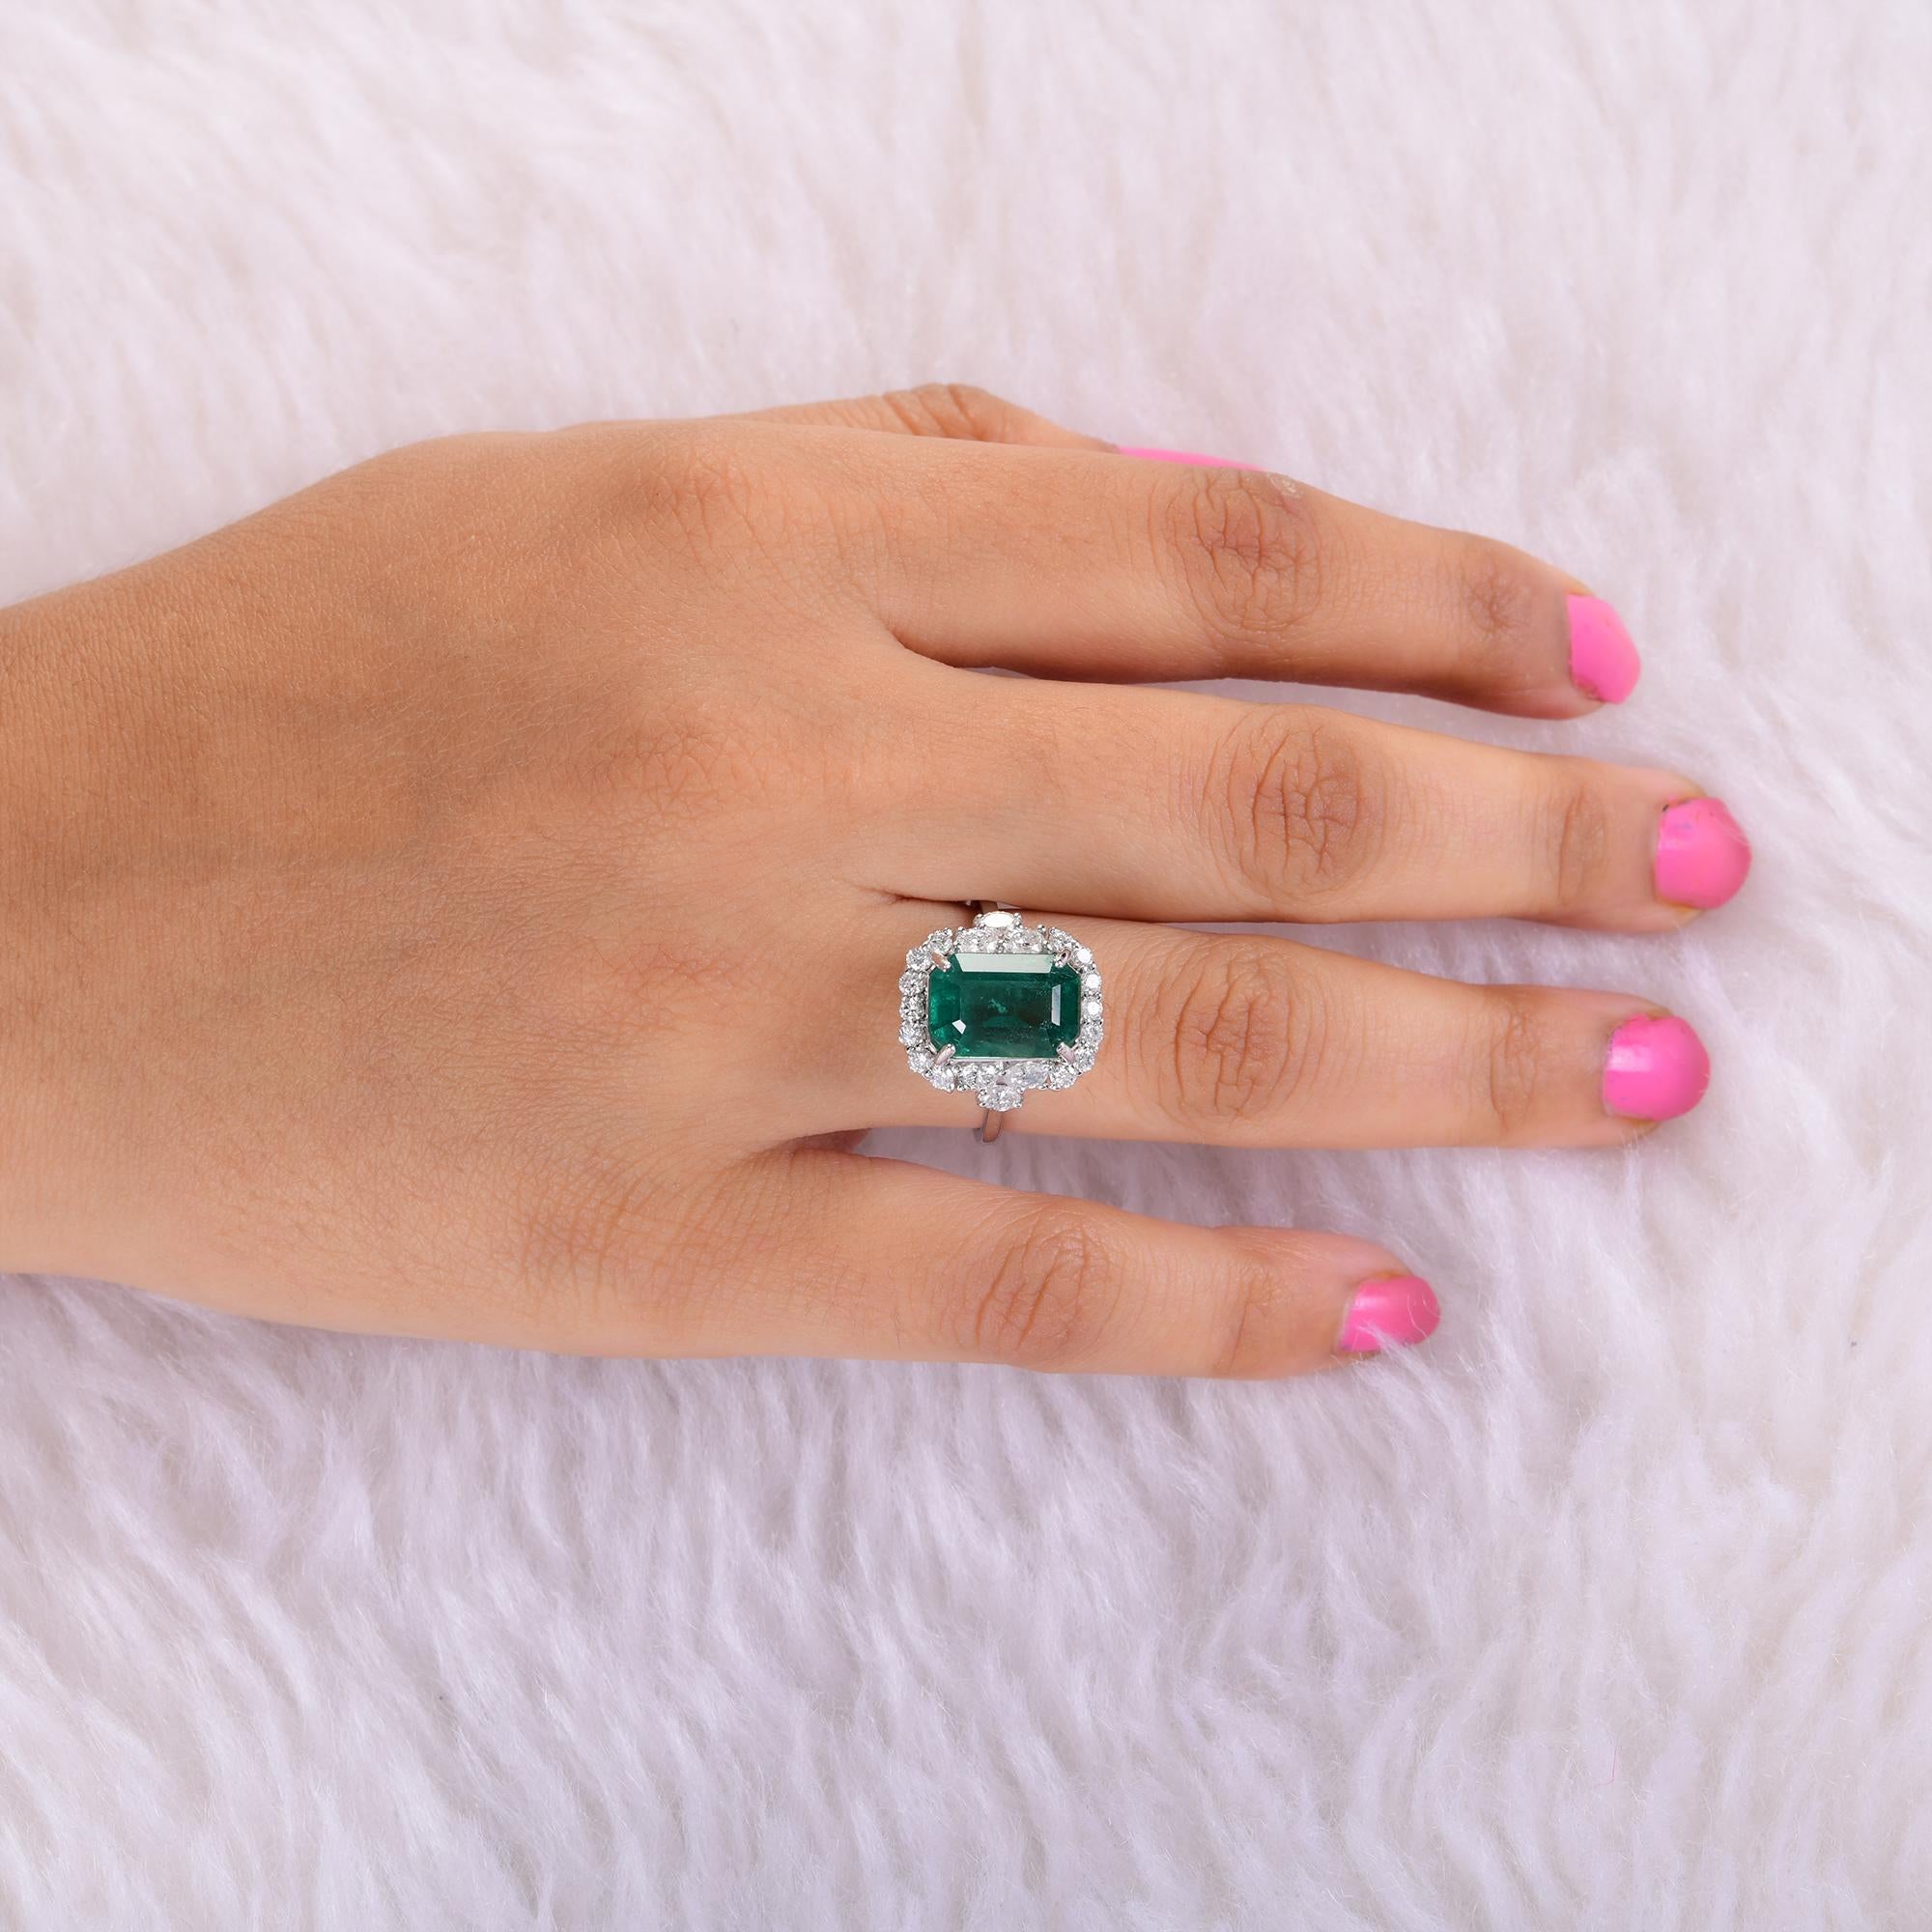 Emerald Cut Zambian Emerald Gemstone Cocktail Ring Diamond 14 Karat White Gold Fine Jewelry For Sale